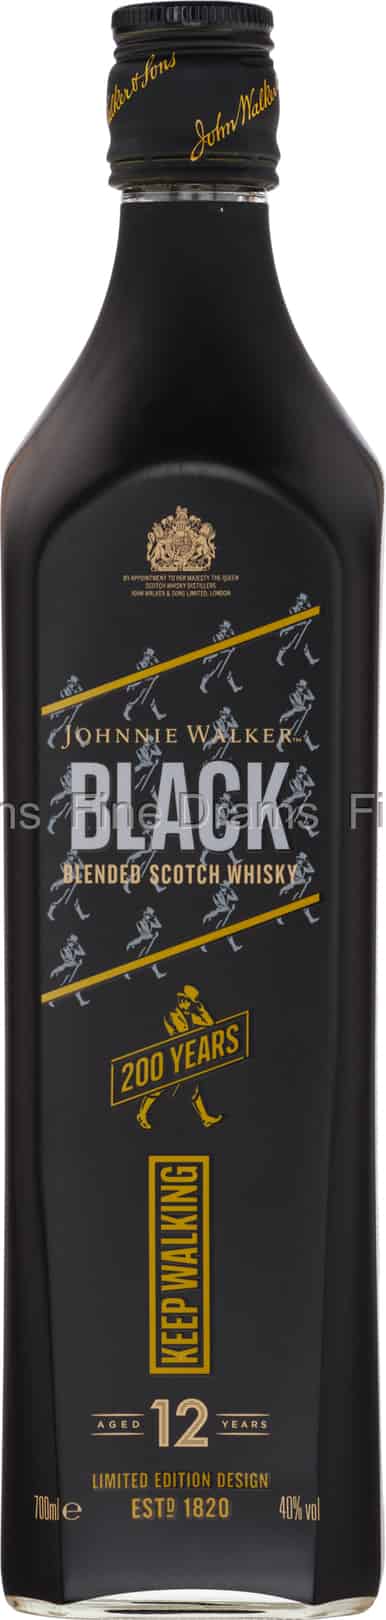 Johnnie Walker Black Year 200th 12 Old Anniversary - Label